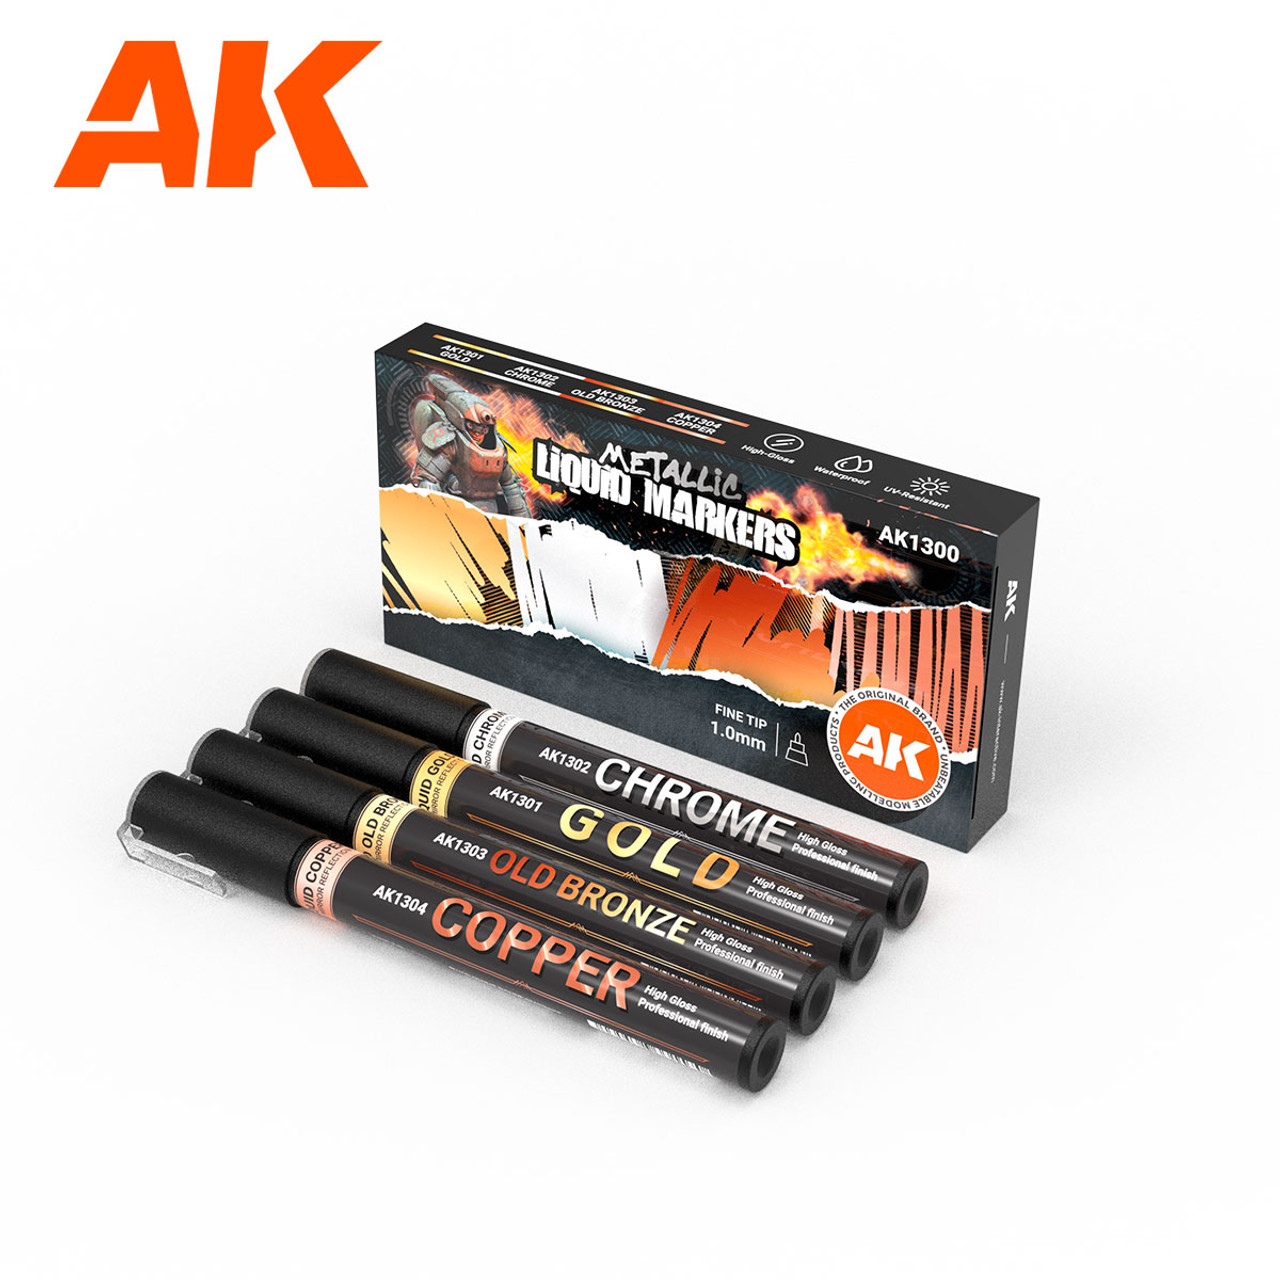 Kits AK INTERACTIVE - Minisocles-store